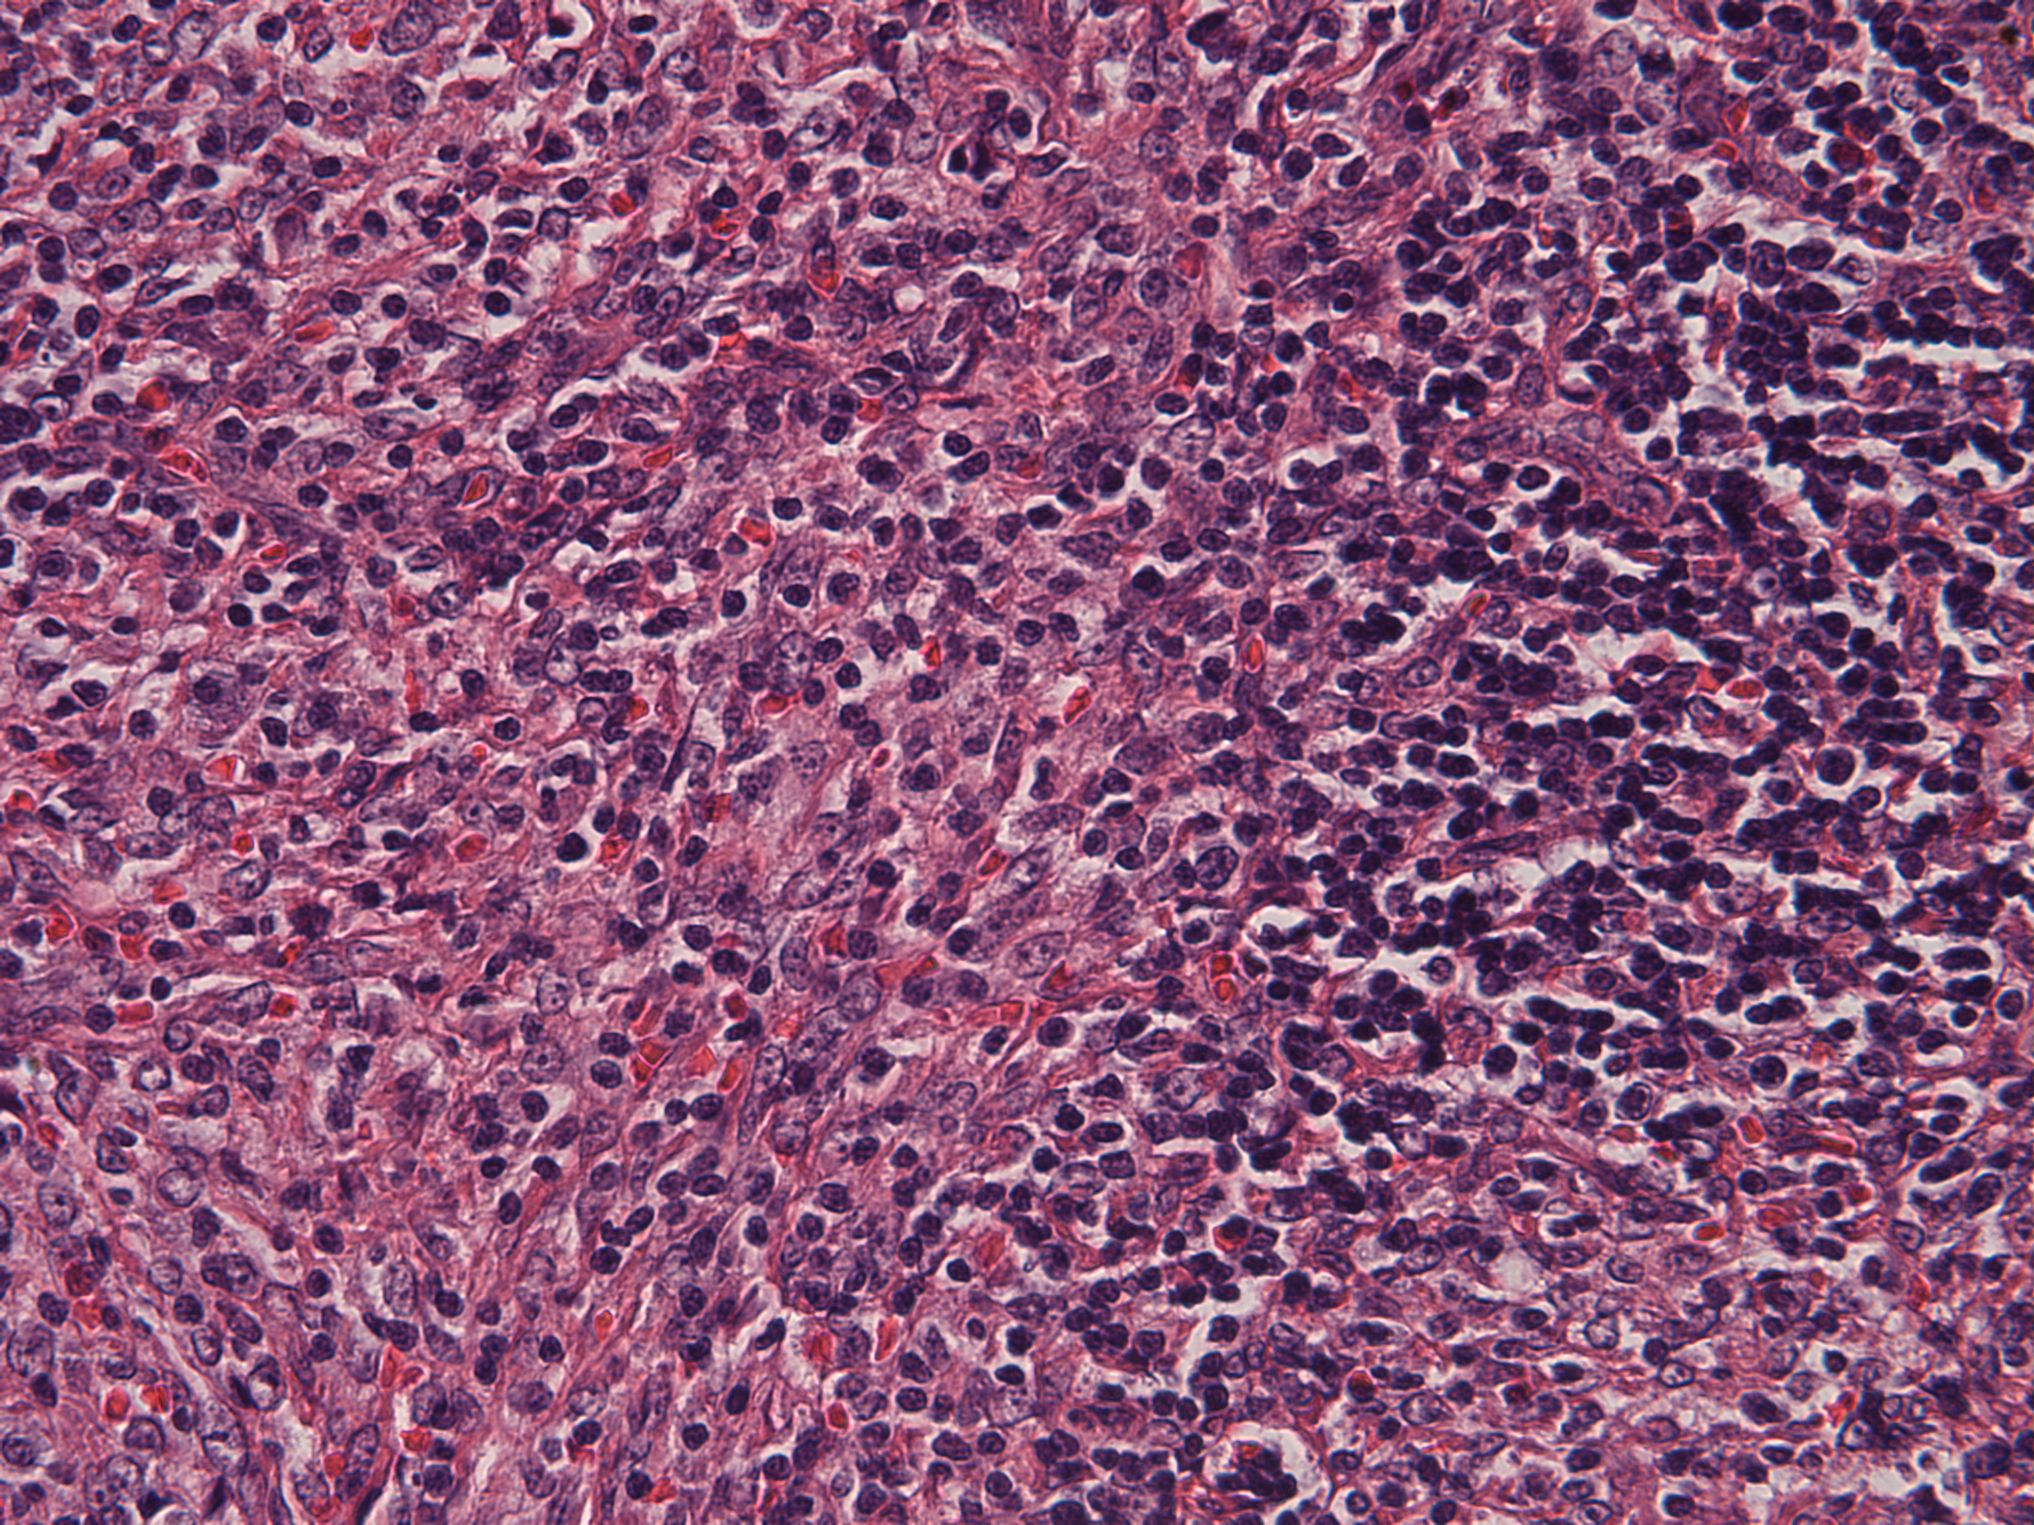 Follicular dendritic cell tumor